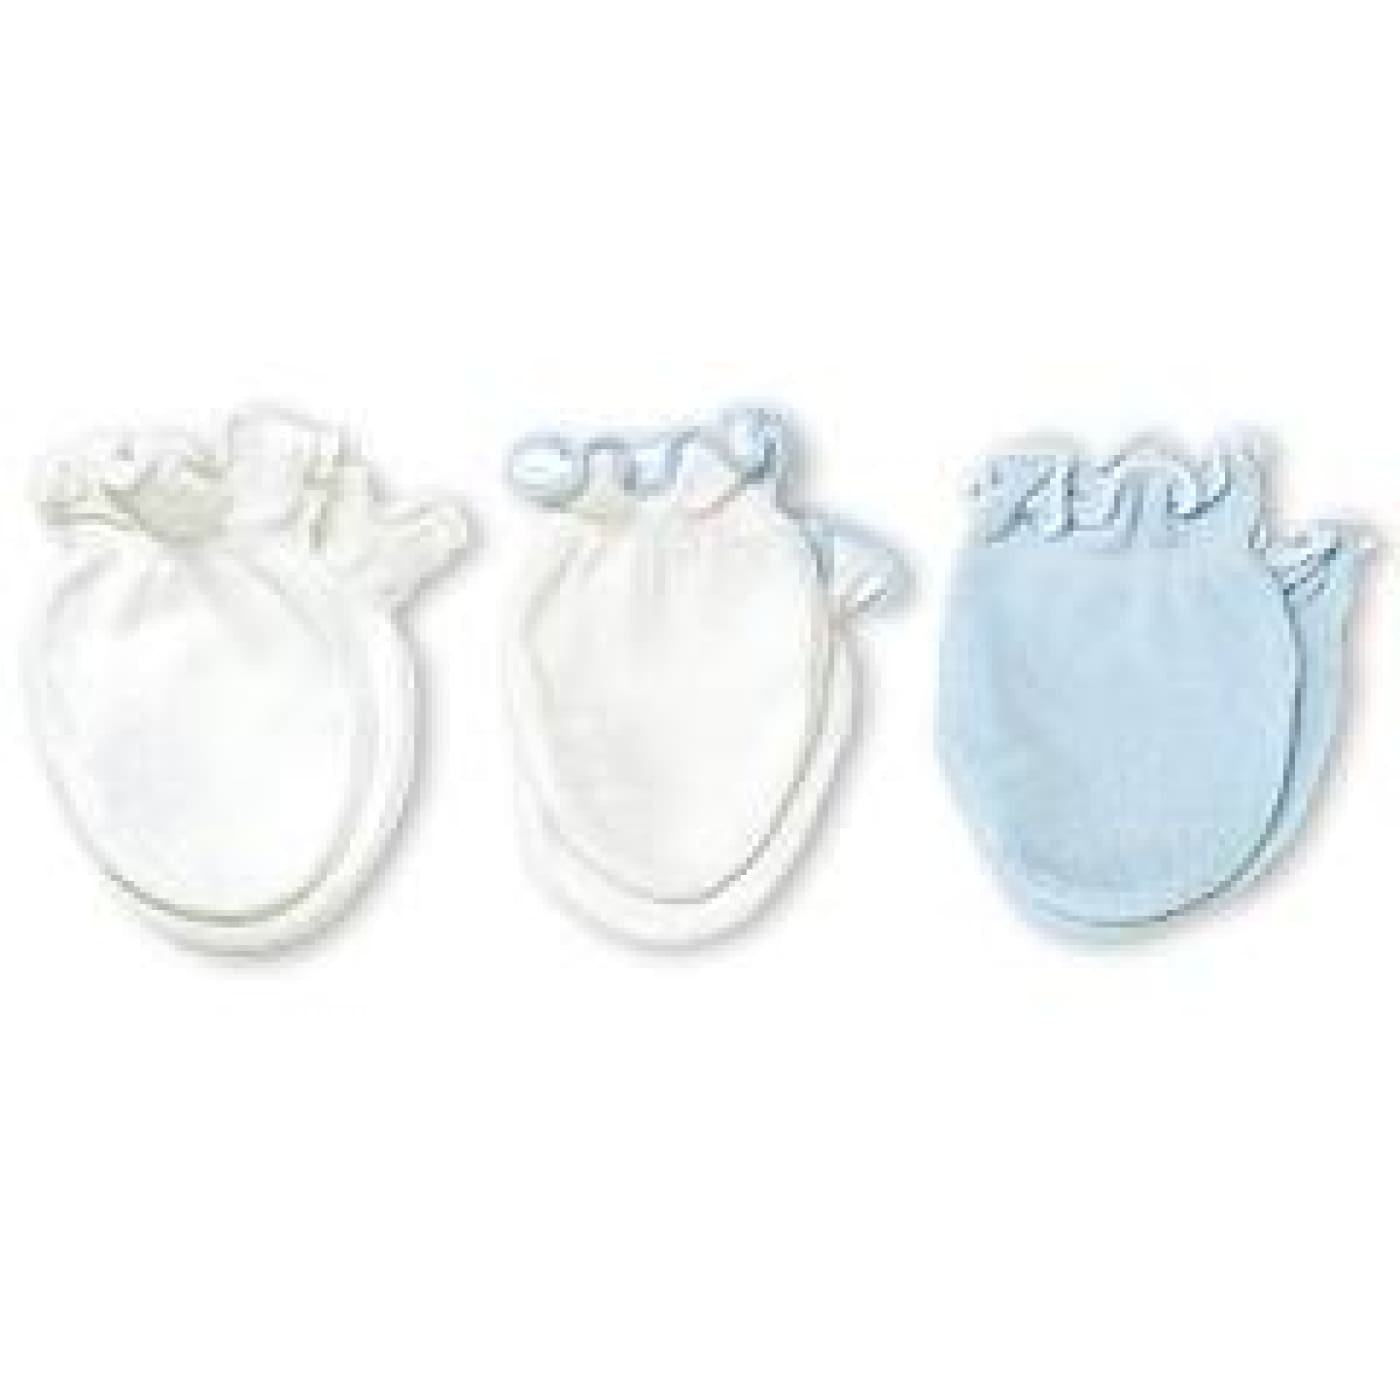 Playette Preemie Mittens - Blue/White 3PK - Prem / Blue/White - BABY & TODDLER CLOTHING - MITTENS/SOCKS/SHOES